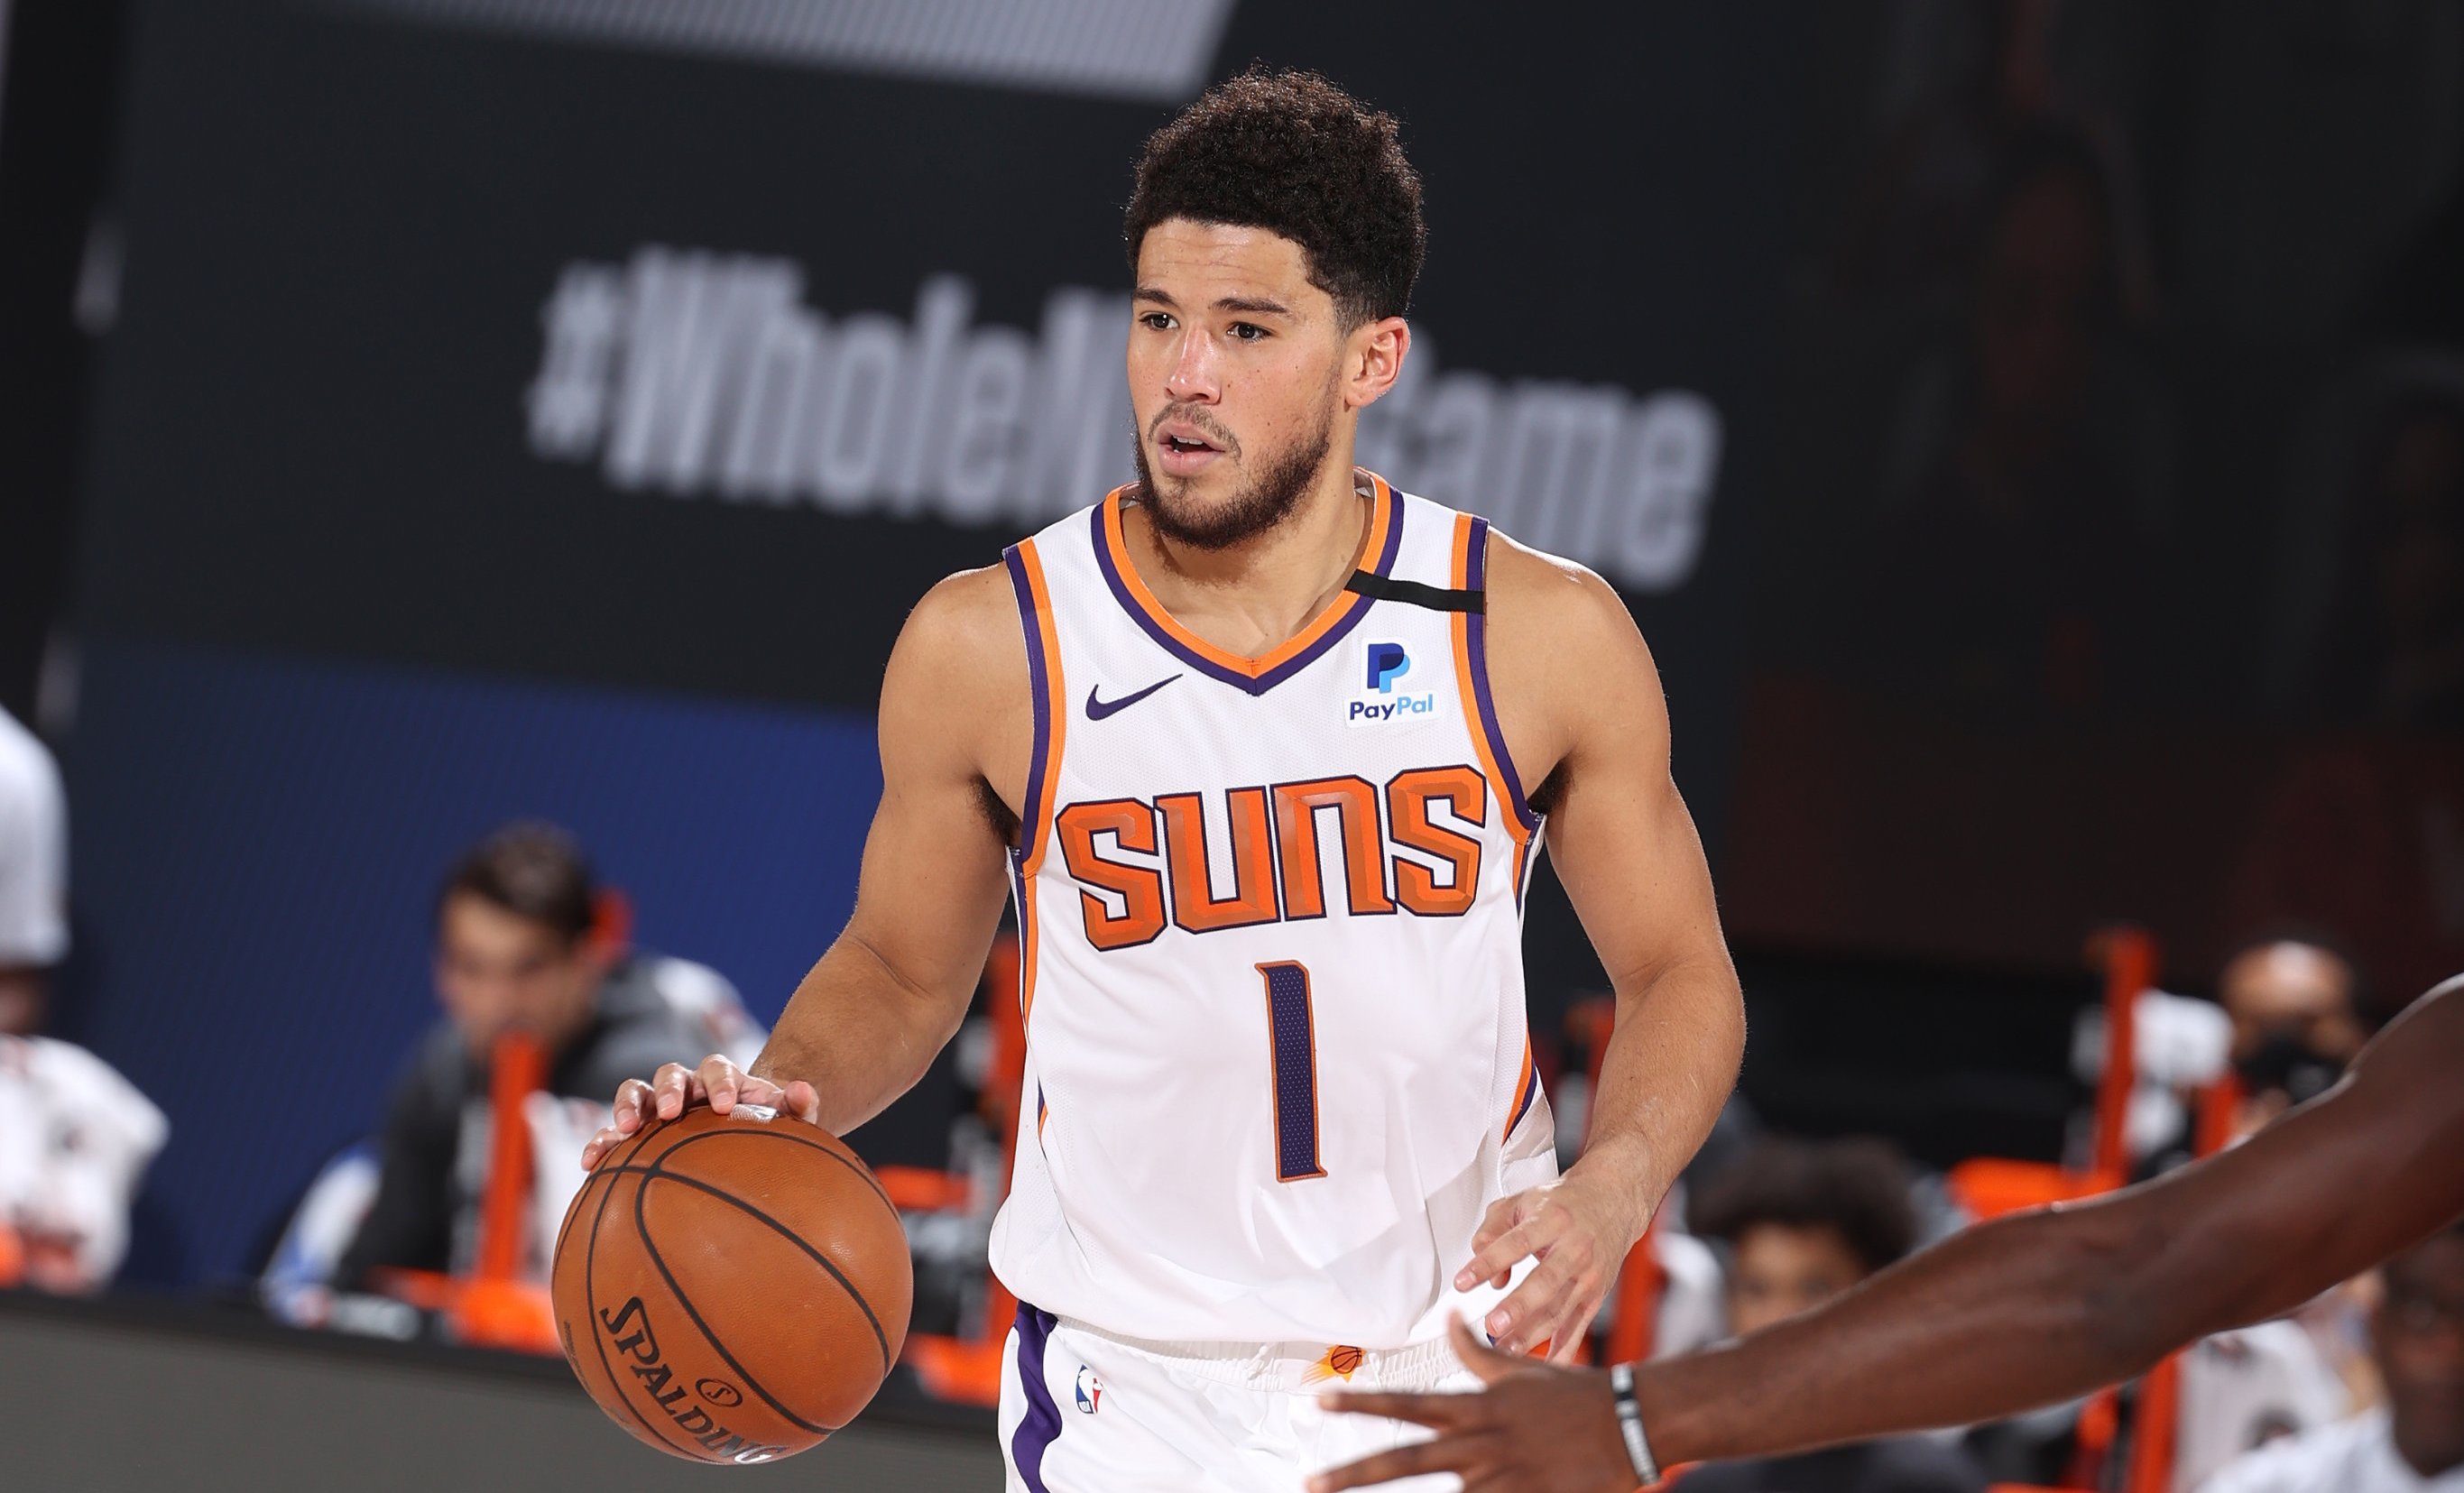 Suns’ magical NBA run ends in heartbreak